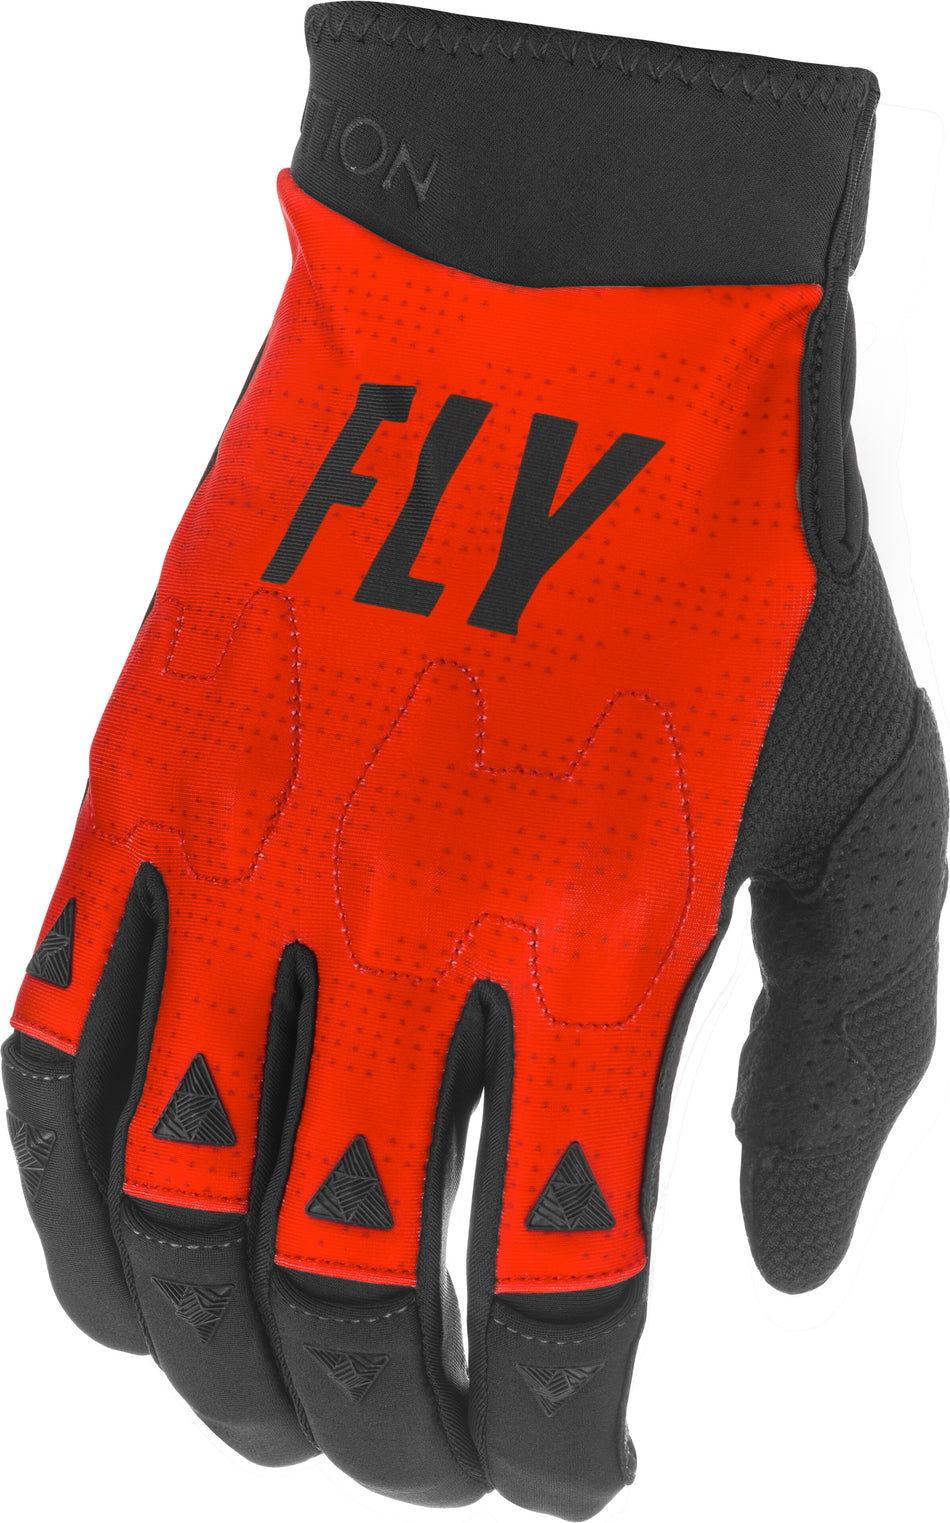 FLY RACING Evolution Dst Gloves Red/Black/White Sz 07 374-11207